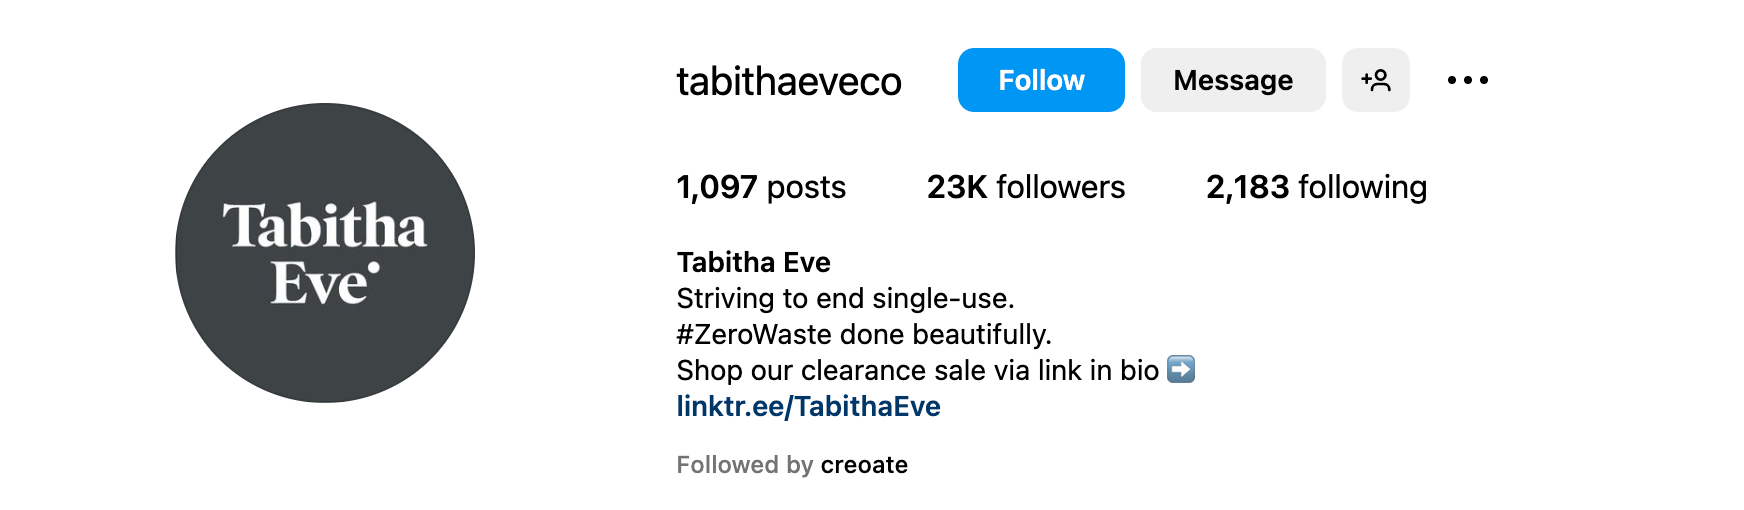 Instagram bio ideas - Tabitha Eve